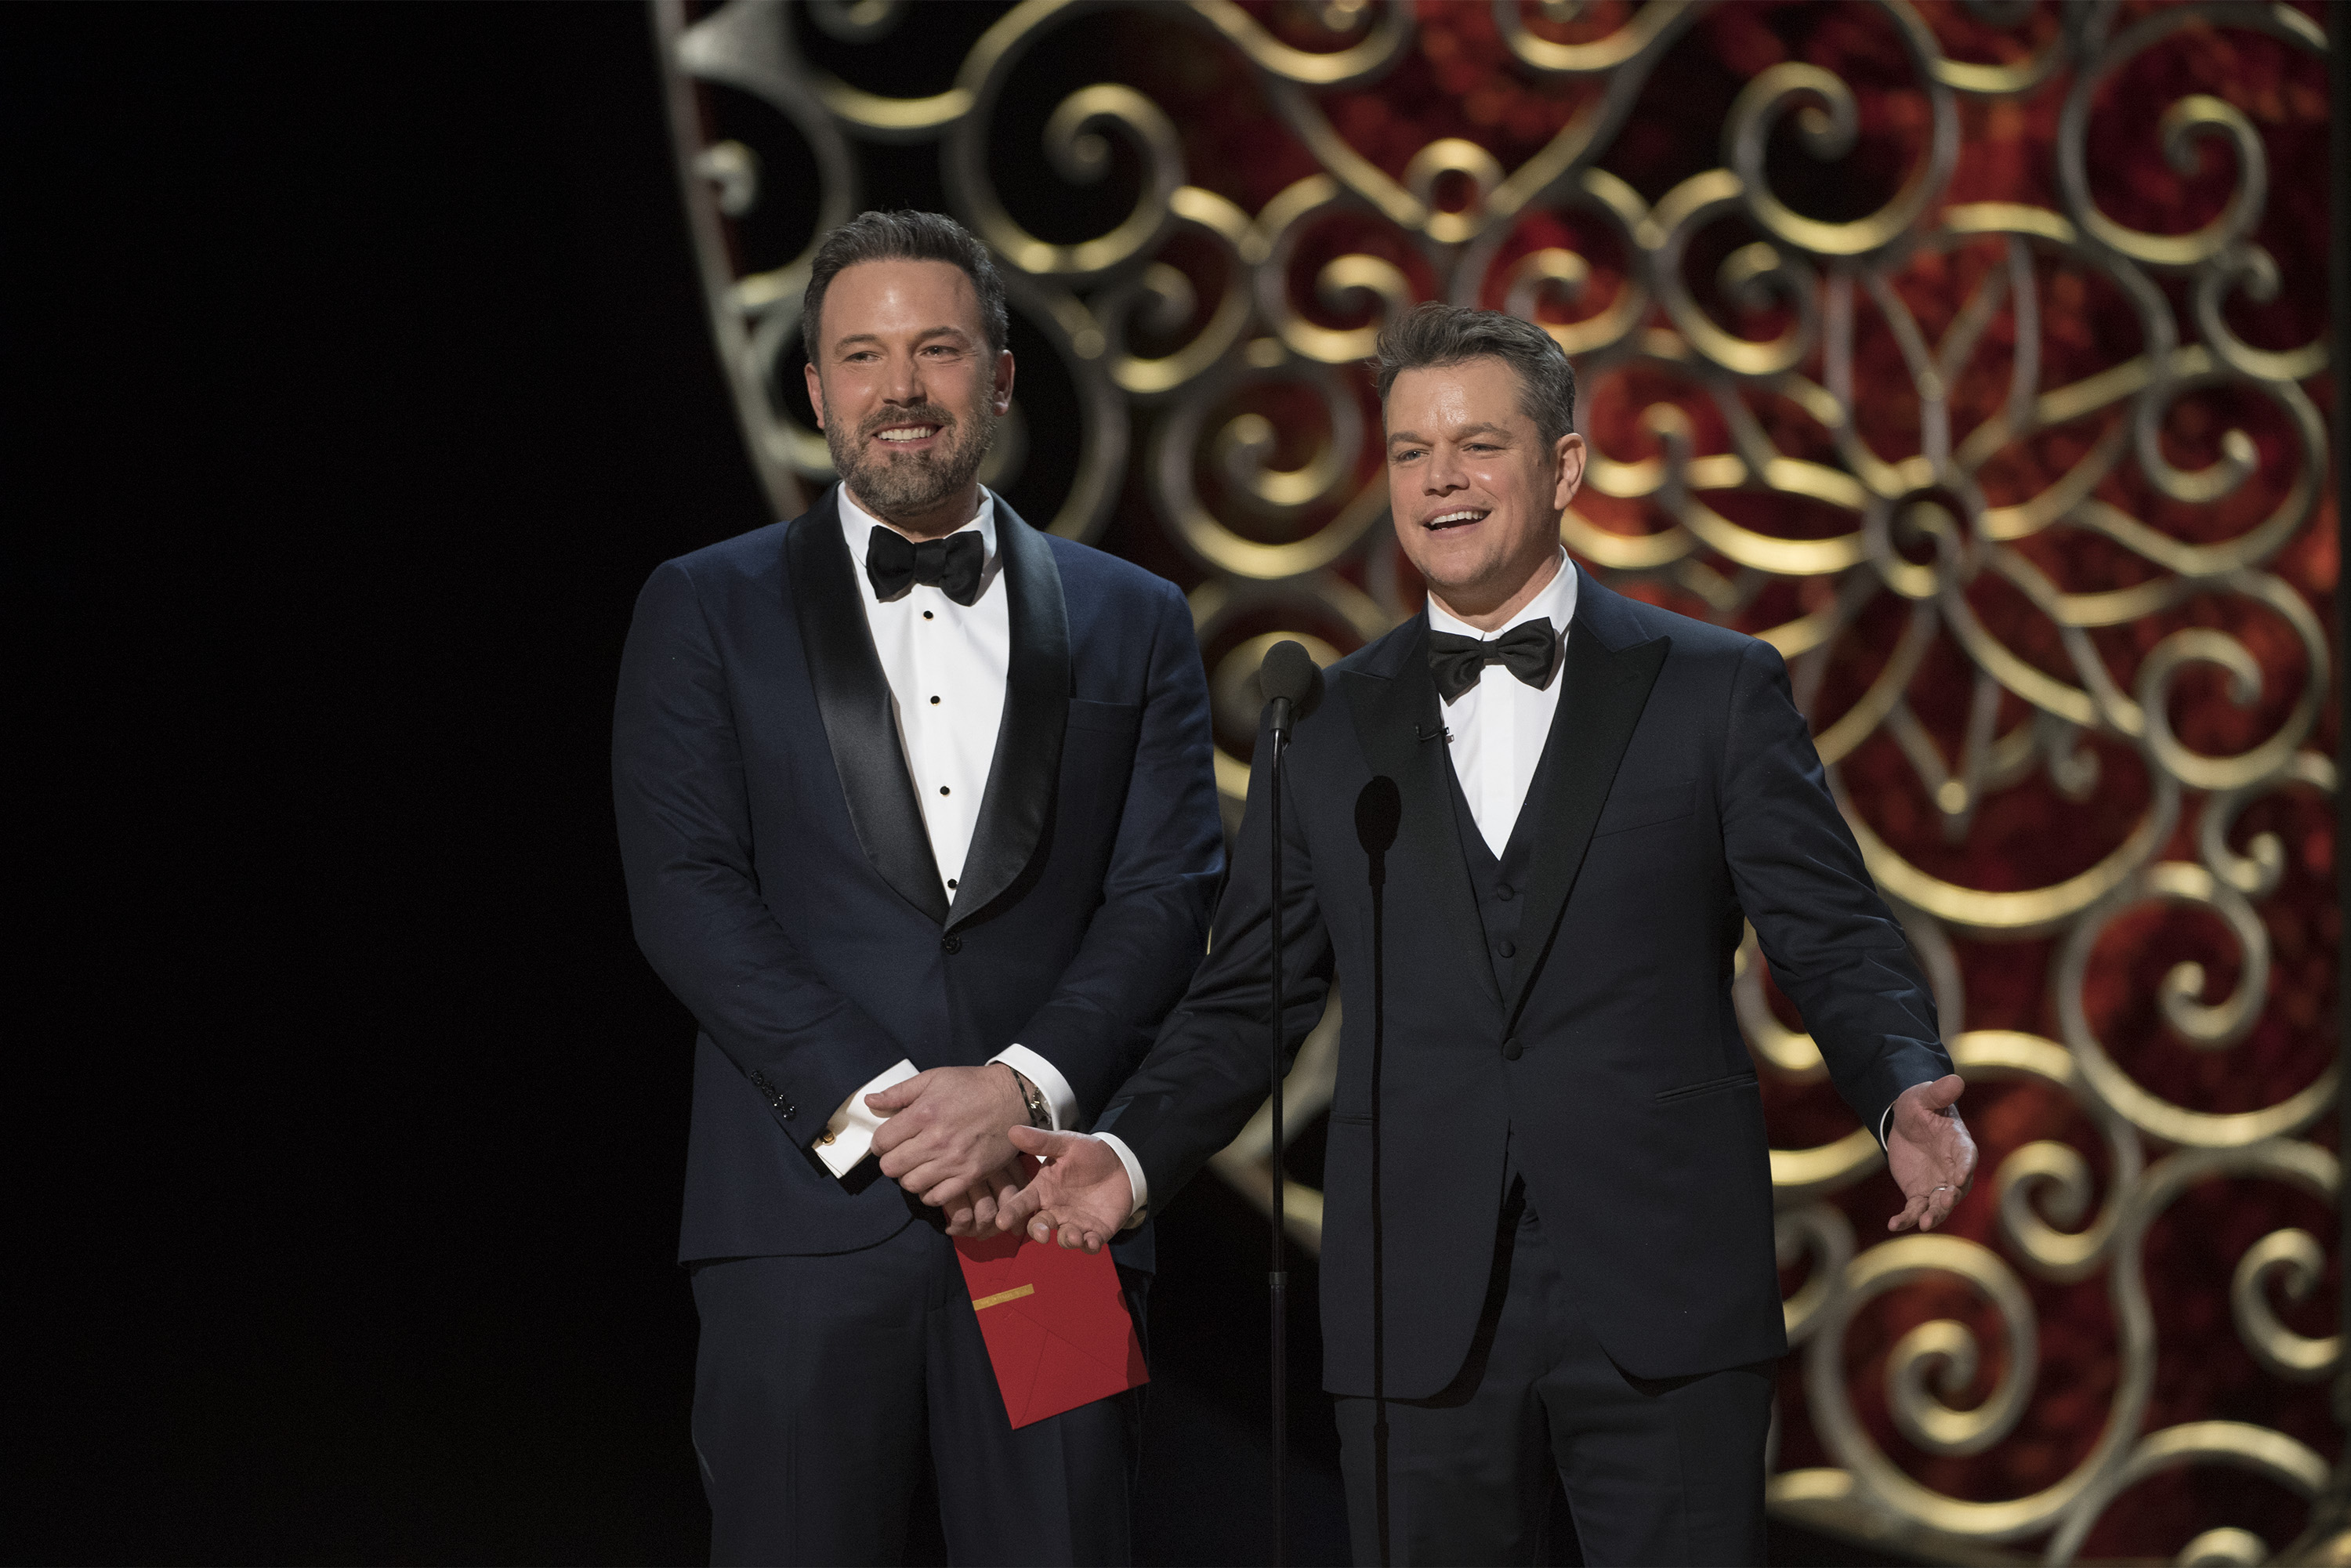 Matt Damon and Ben Affleck at the Oscars